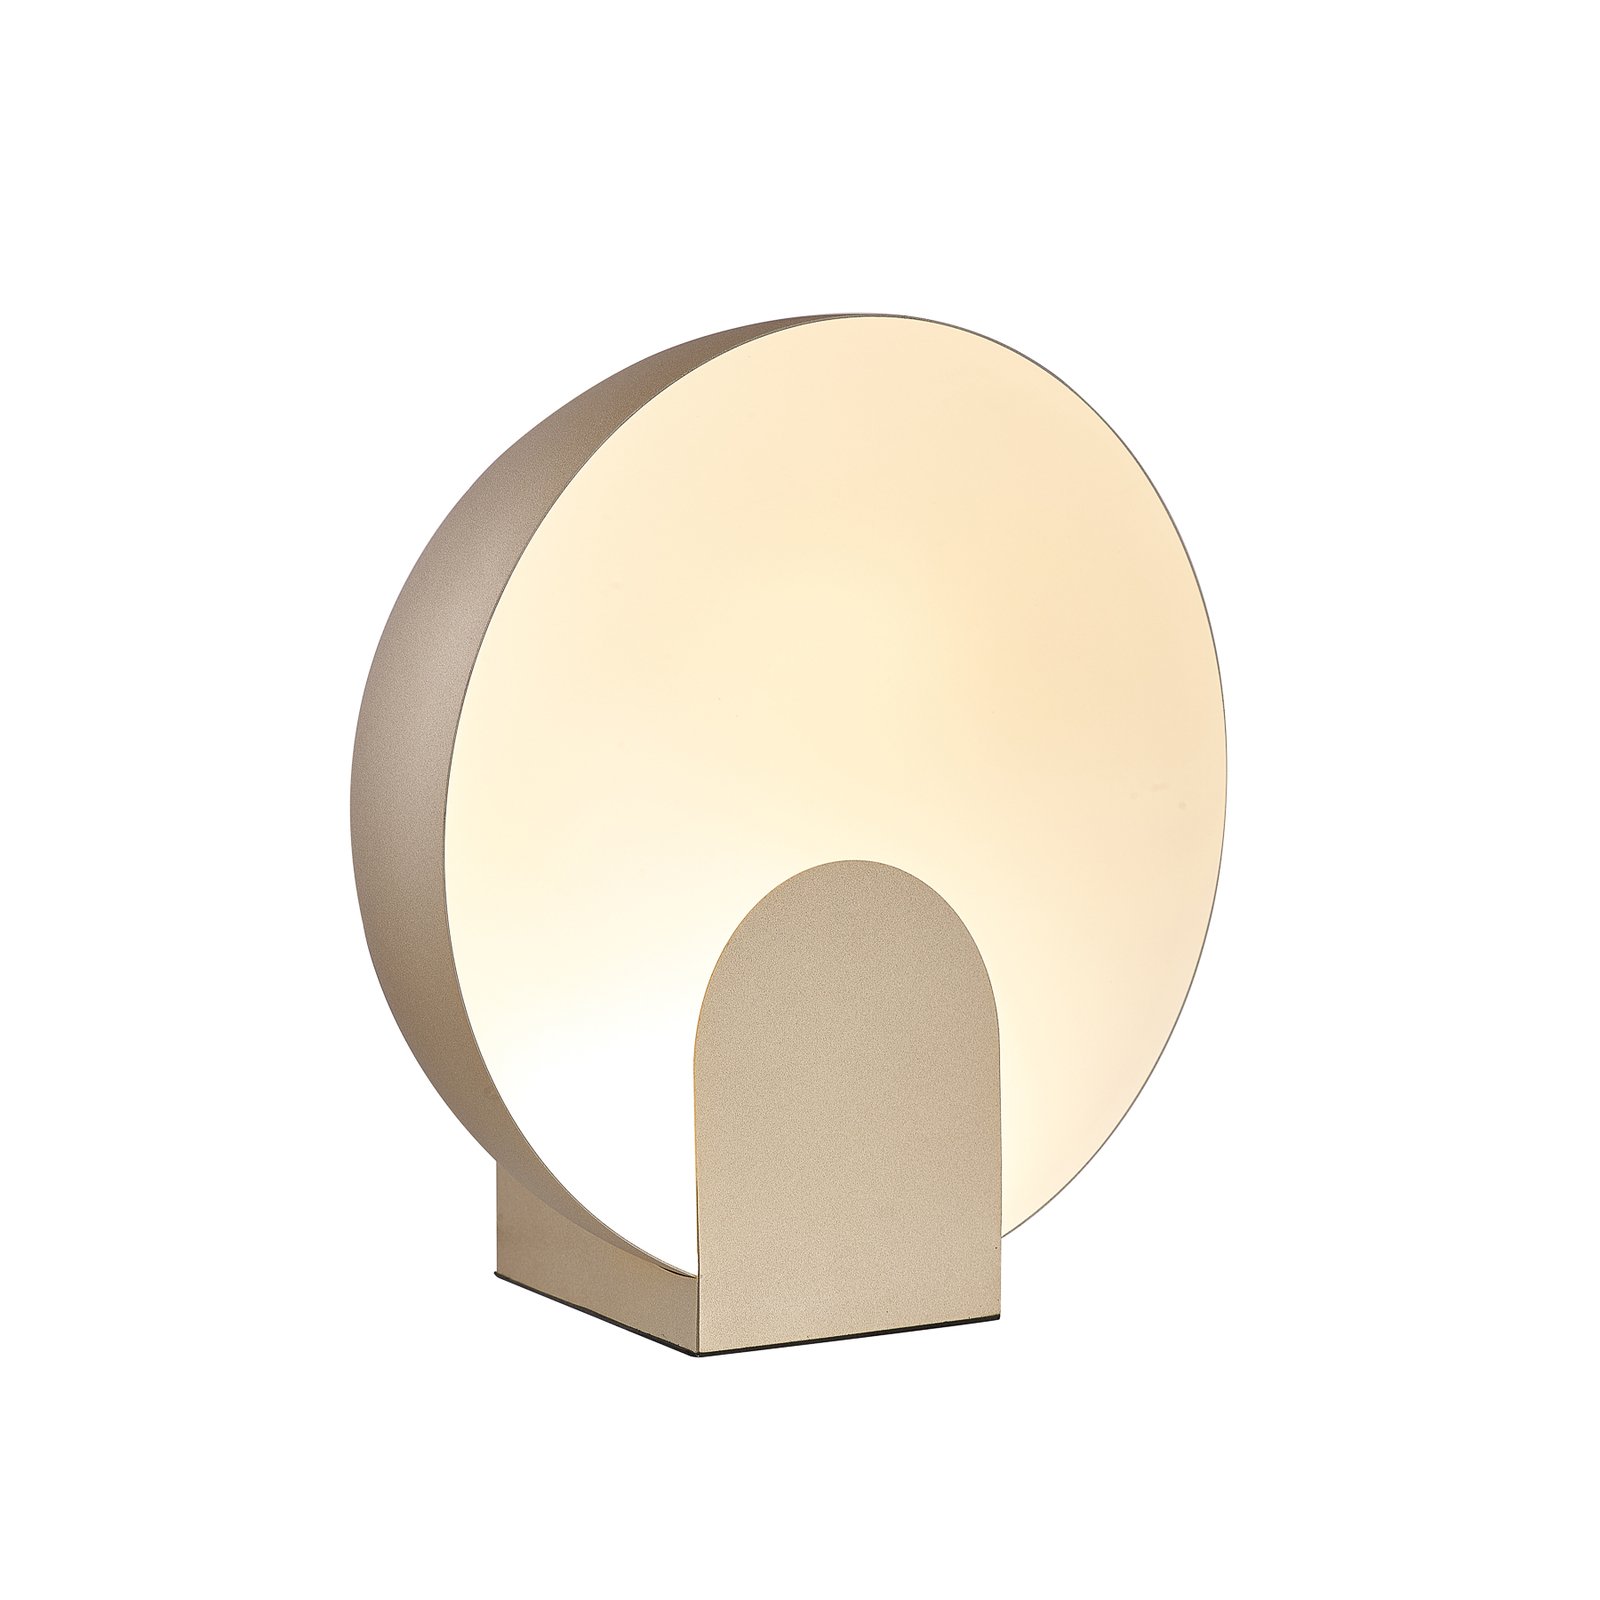 Óculo LED tafellamp, goudkleurig, Ø 30cm, metaal, indirect